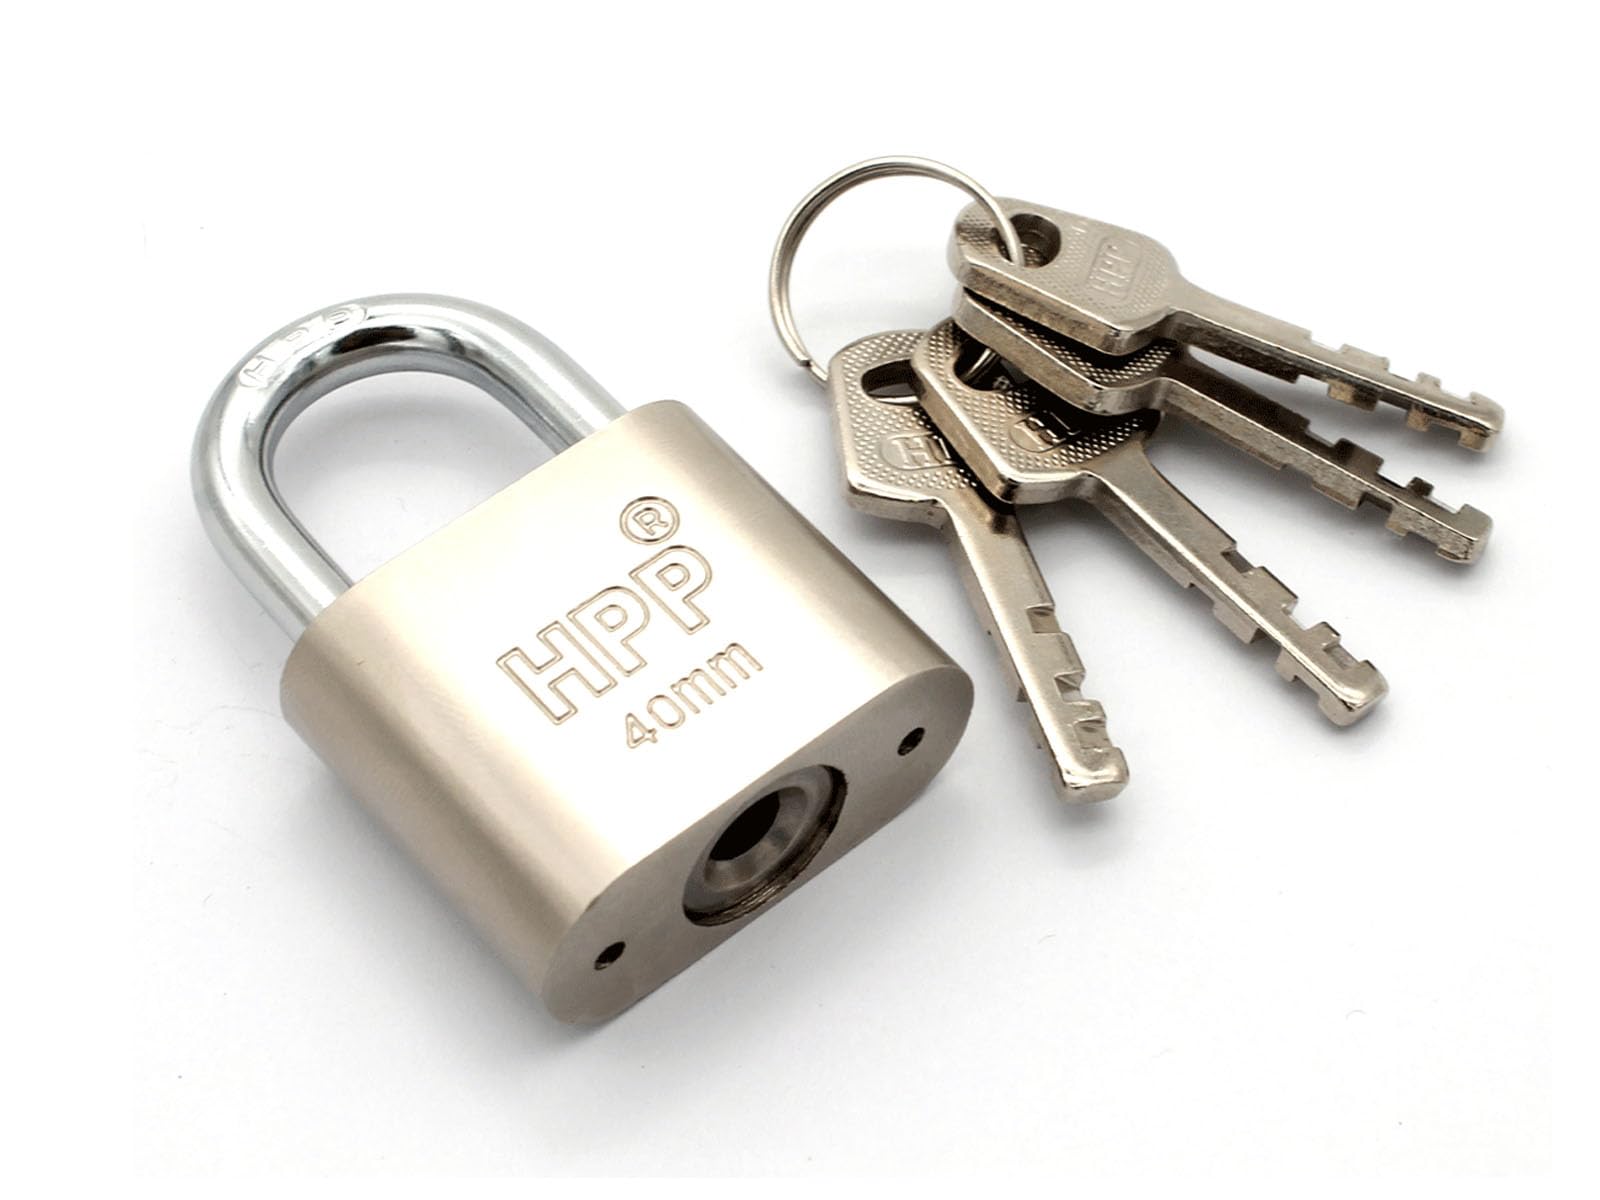 Key and lock